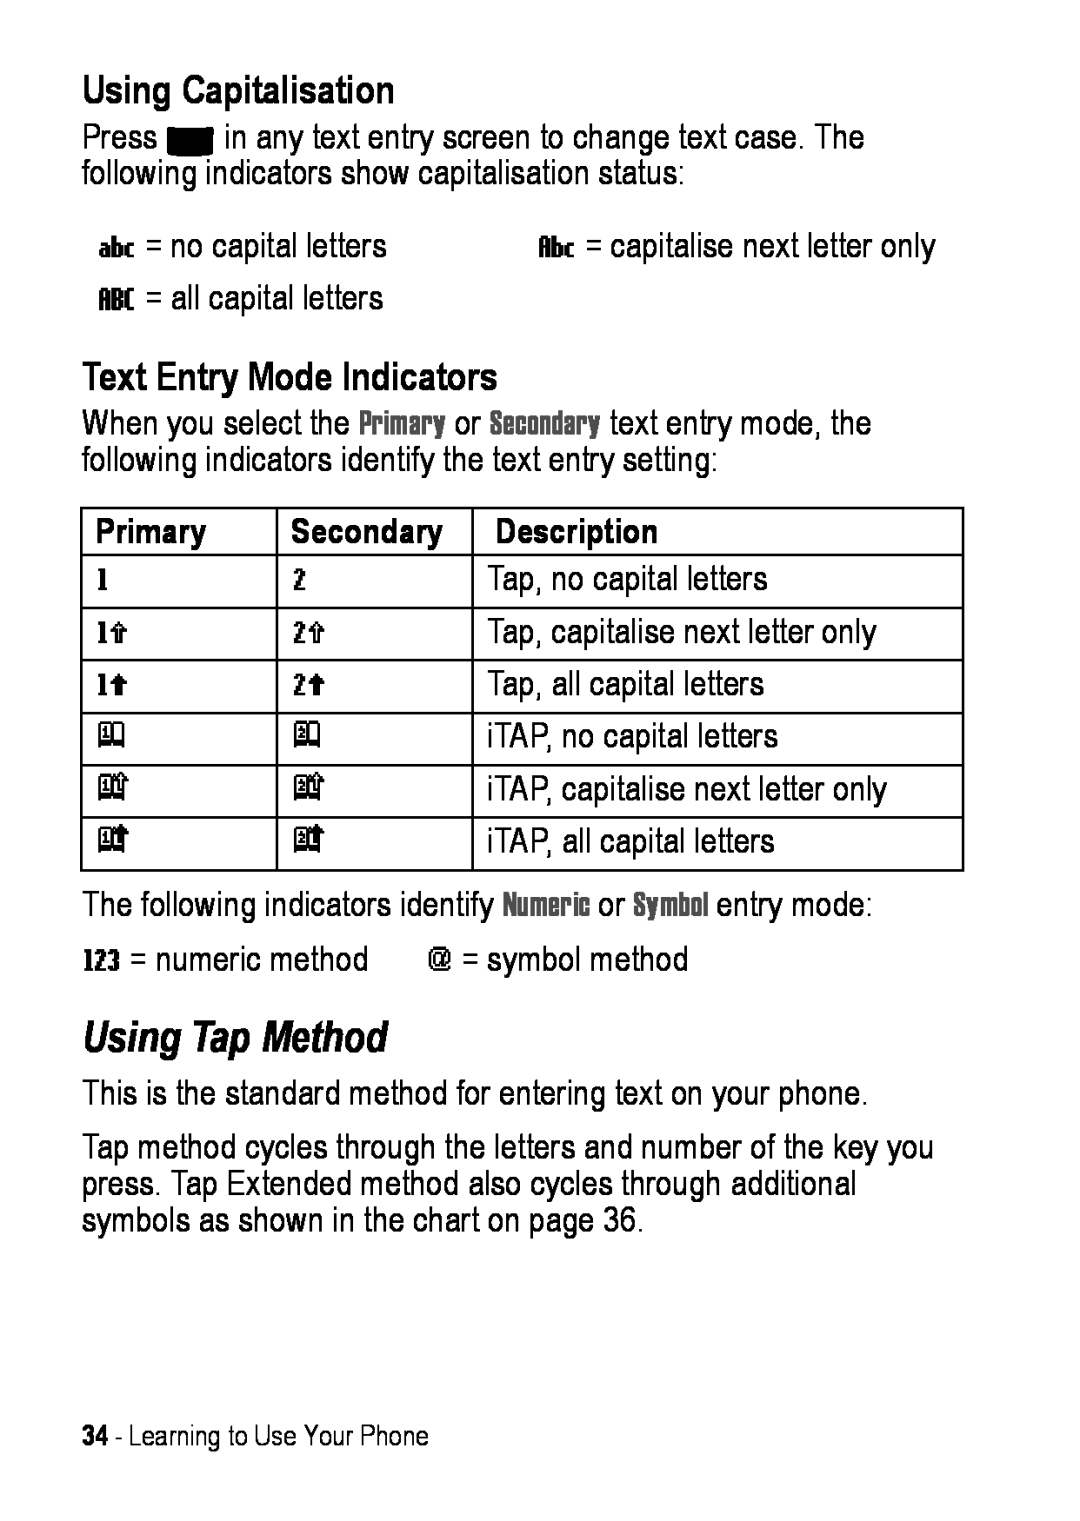 Motorola C390 manual Using Tap Method, Using Capitalisation, Text Entry Mode Indicators 